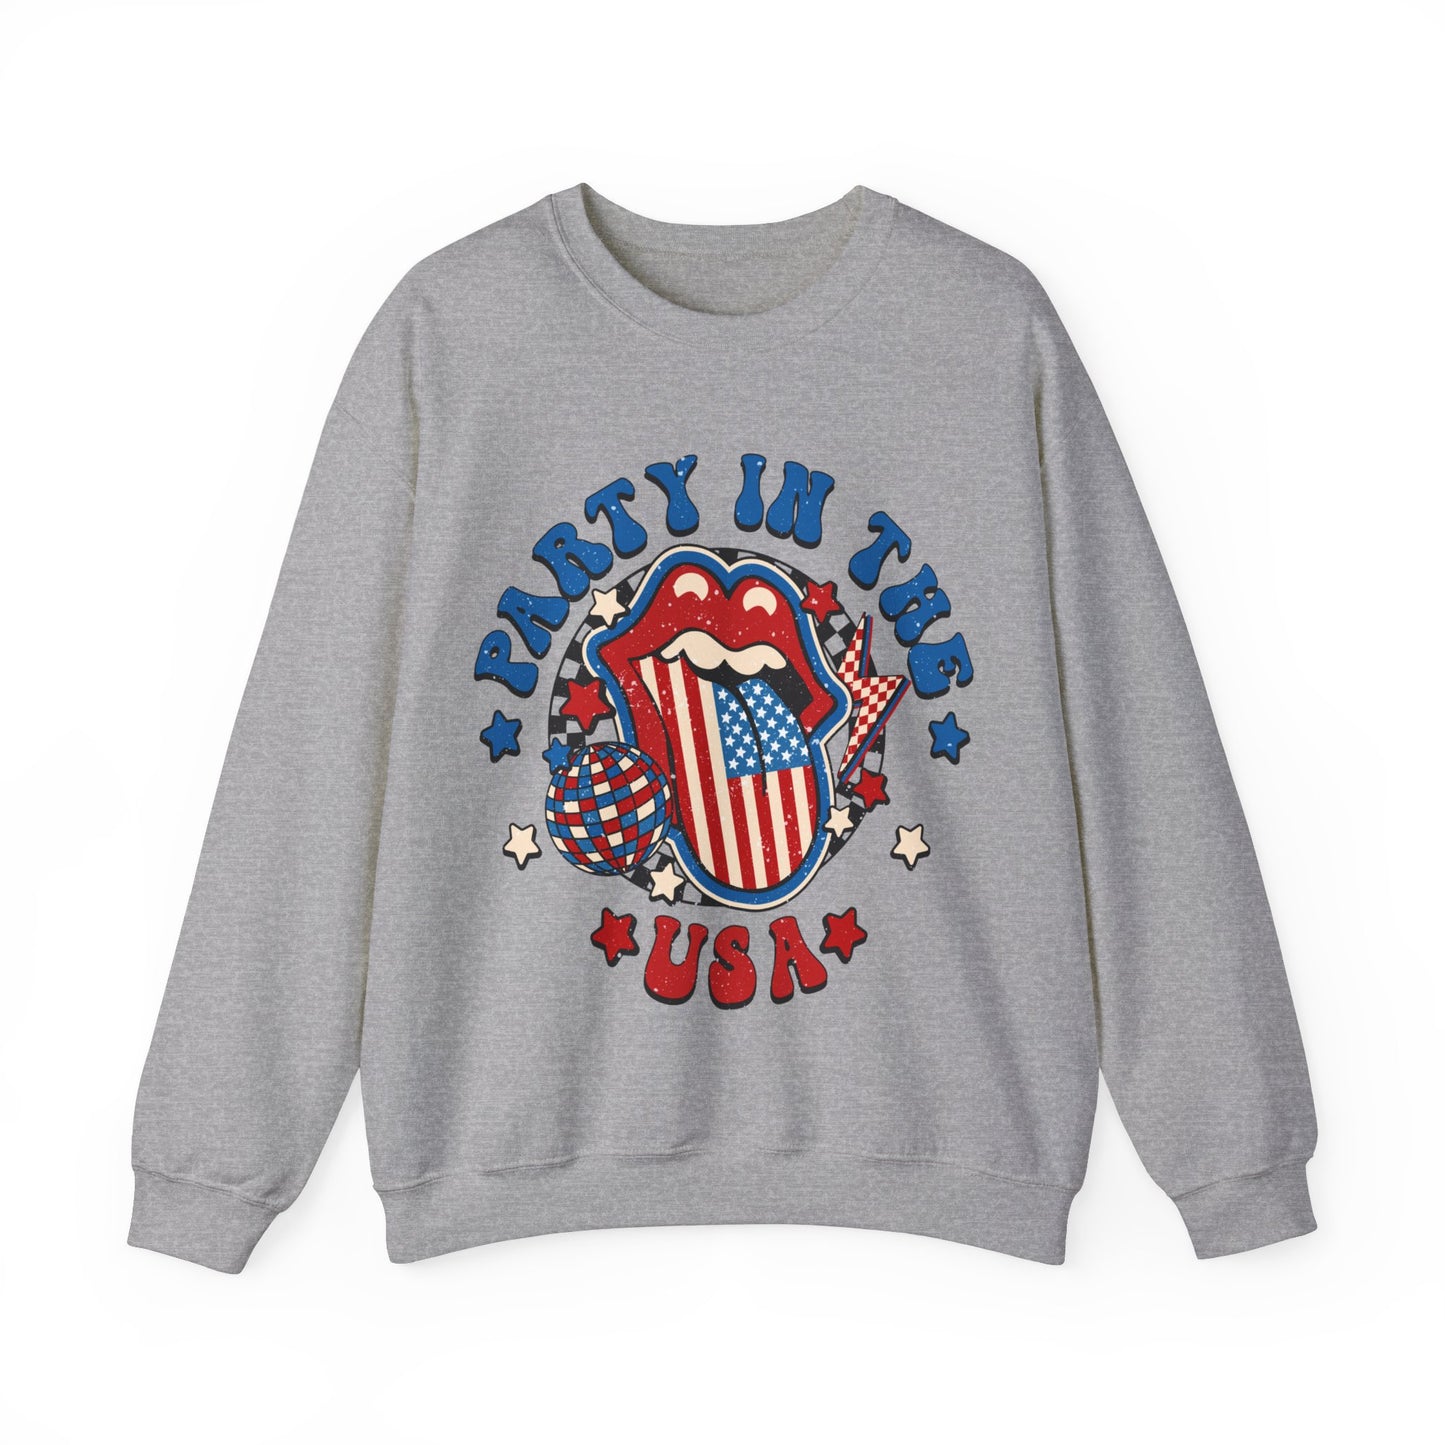 Party in the USA - Crewneck Sweatshirt